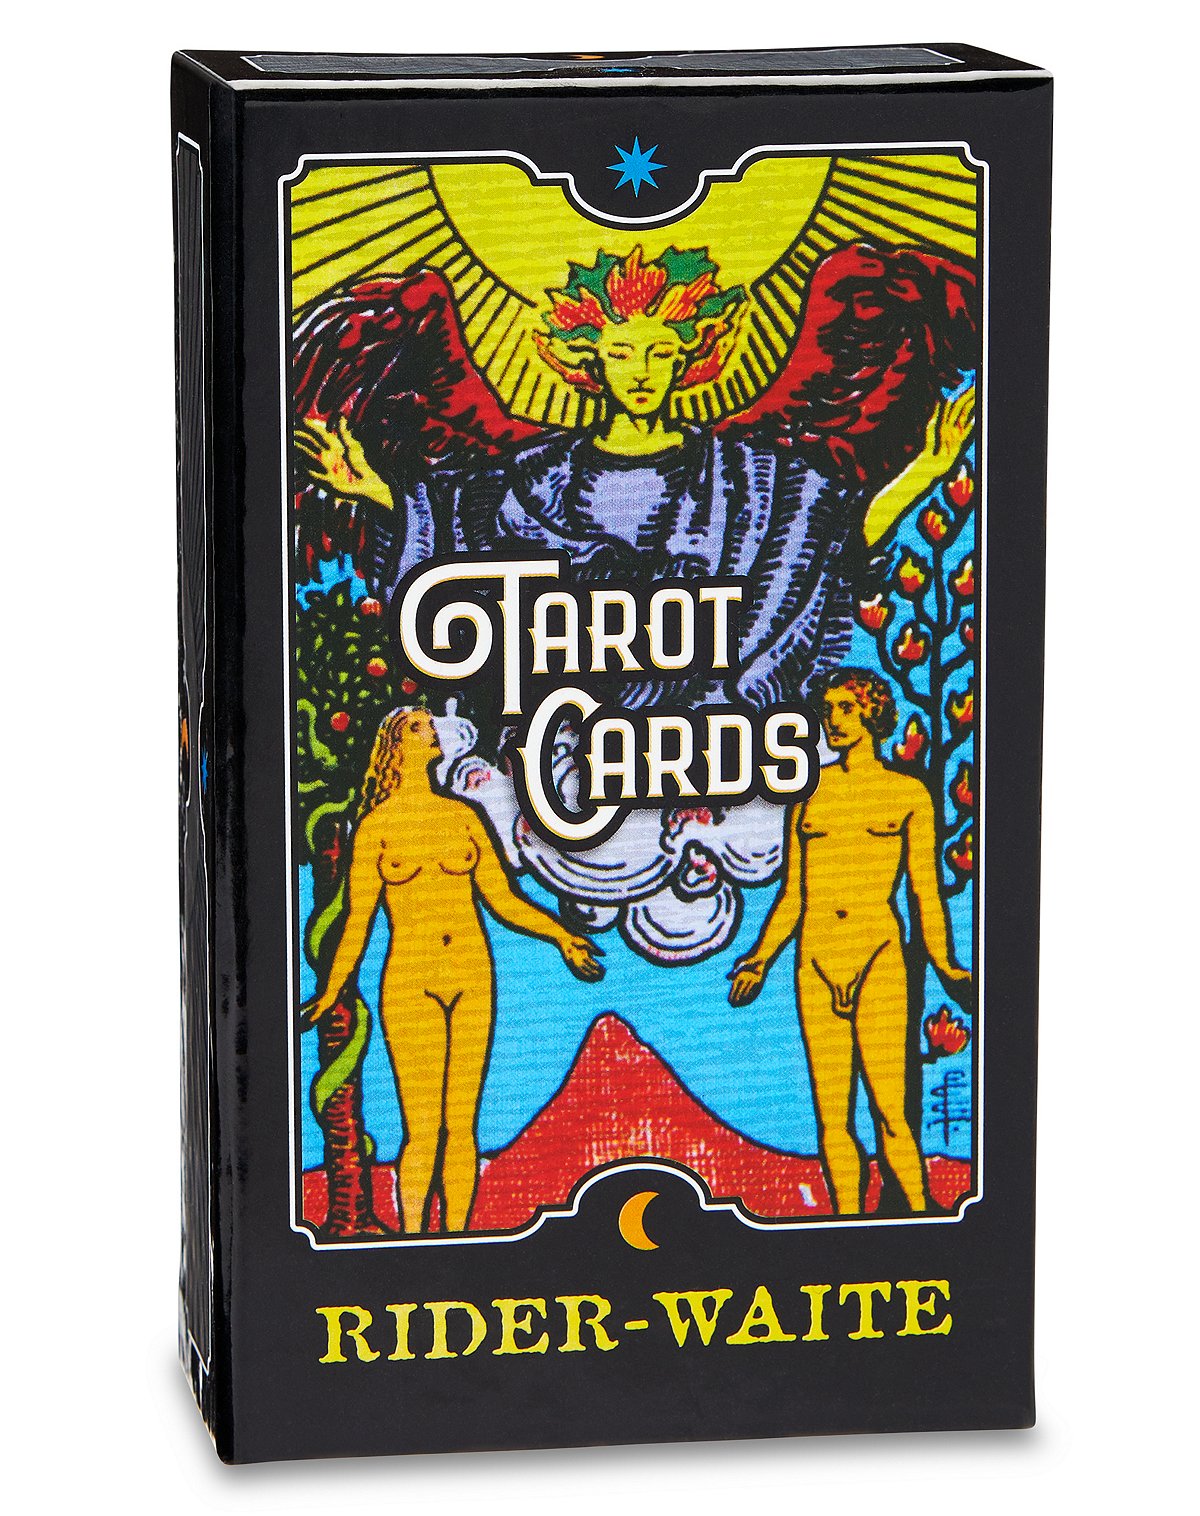 Rider-Waite tarot cards